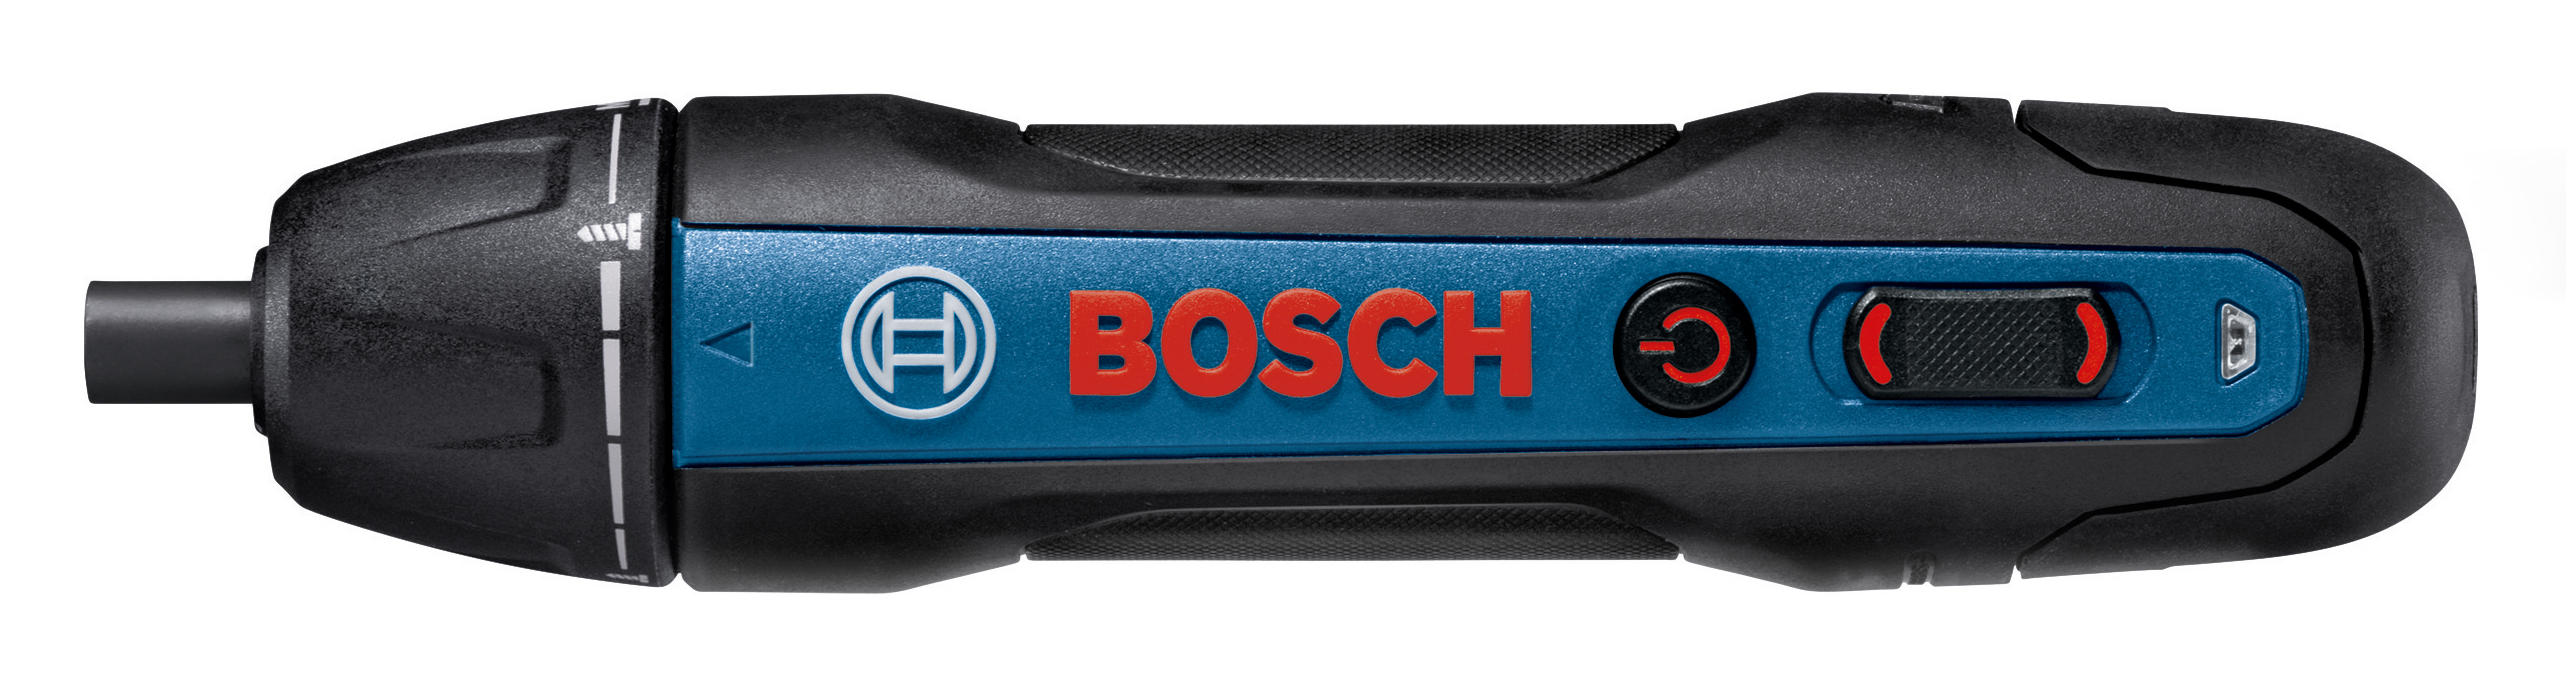 iF Design - Bosch